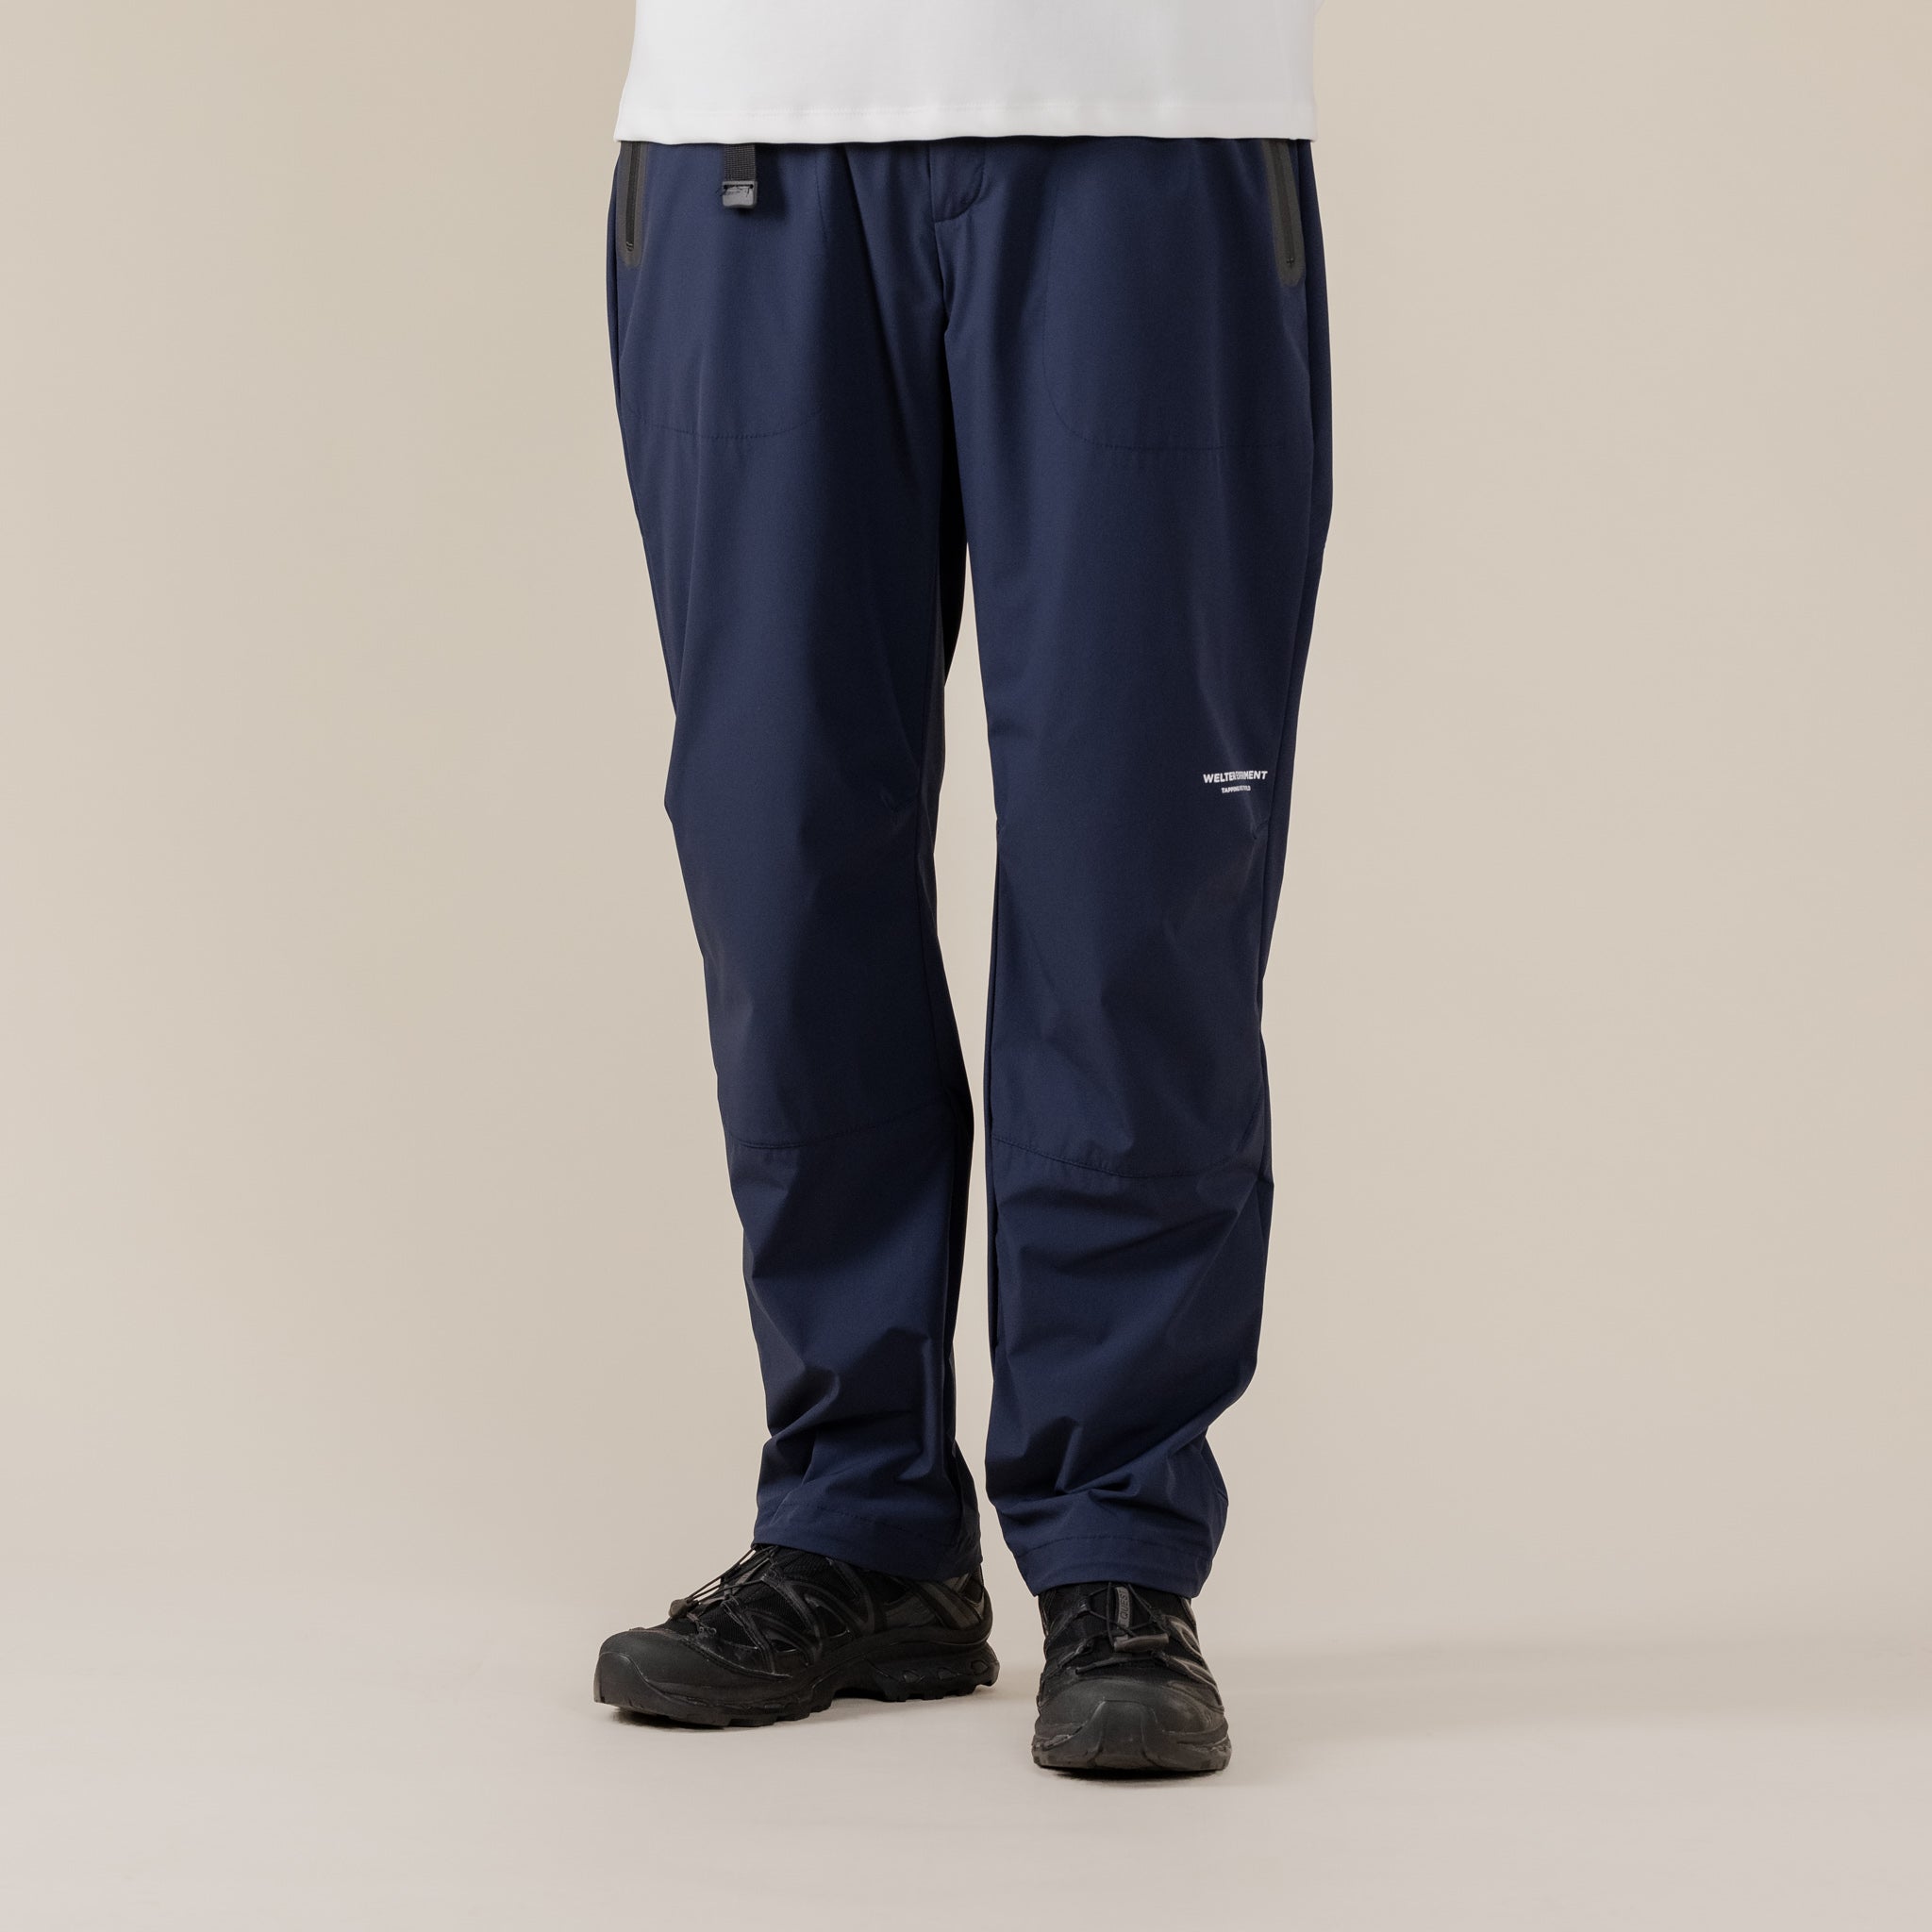 Welter Experiment - Rip Stop Trecking Pants WPL008 - Navy Blue Korean Outdoor Clothing Gorp Gorpcore UK Stockist